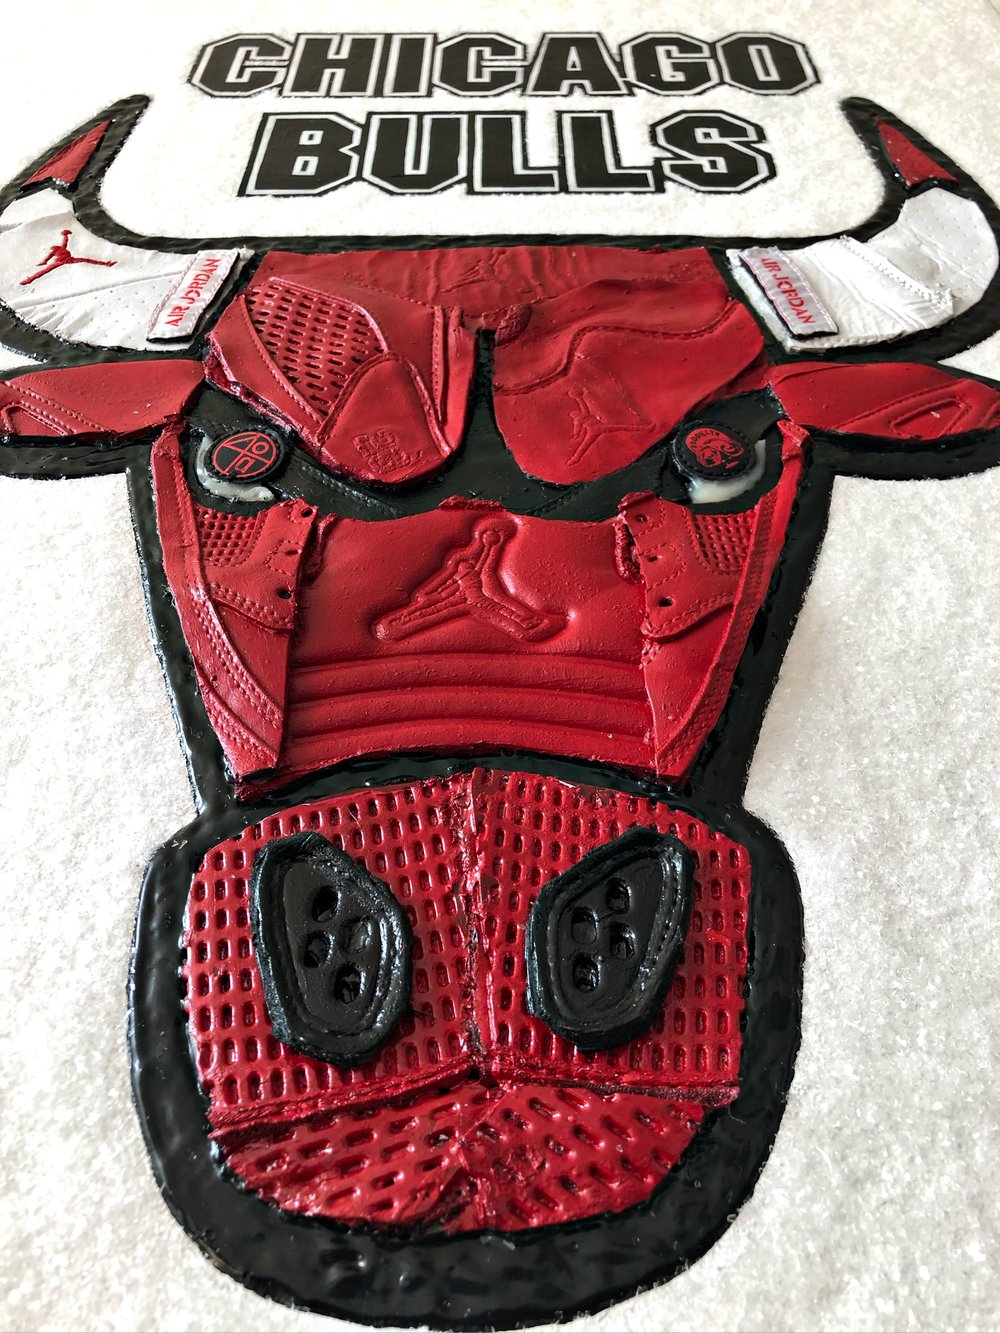 Chicago Bulls “Like Mike”